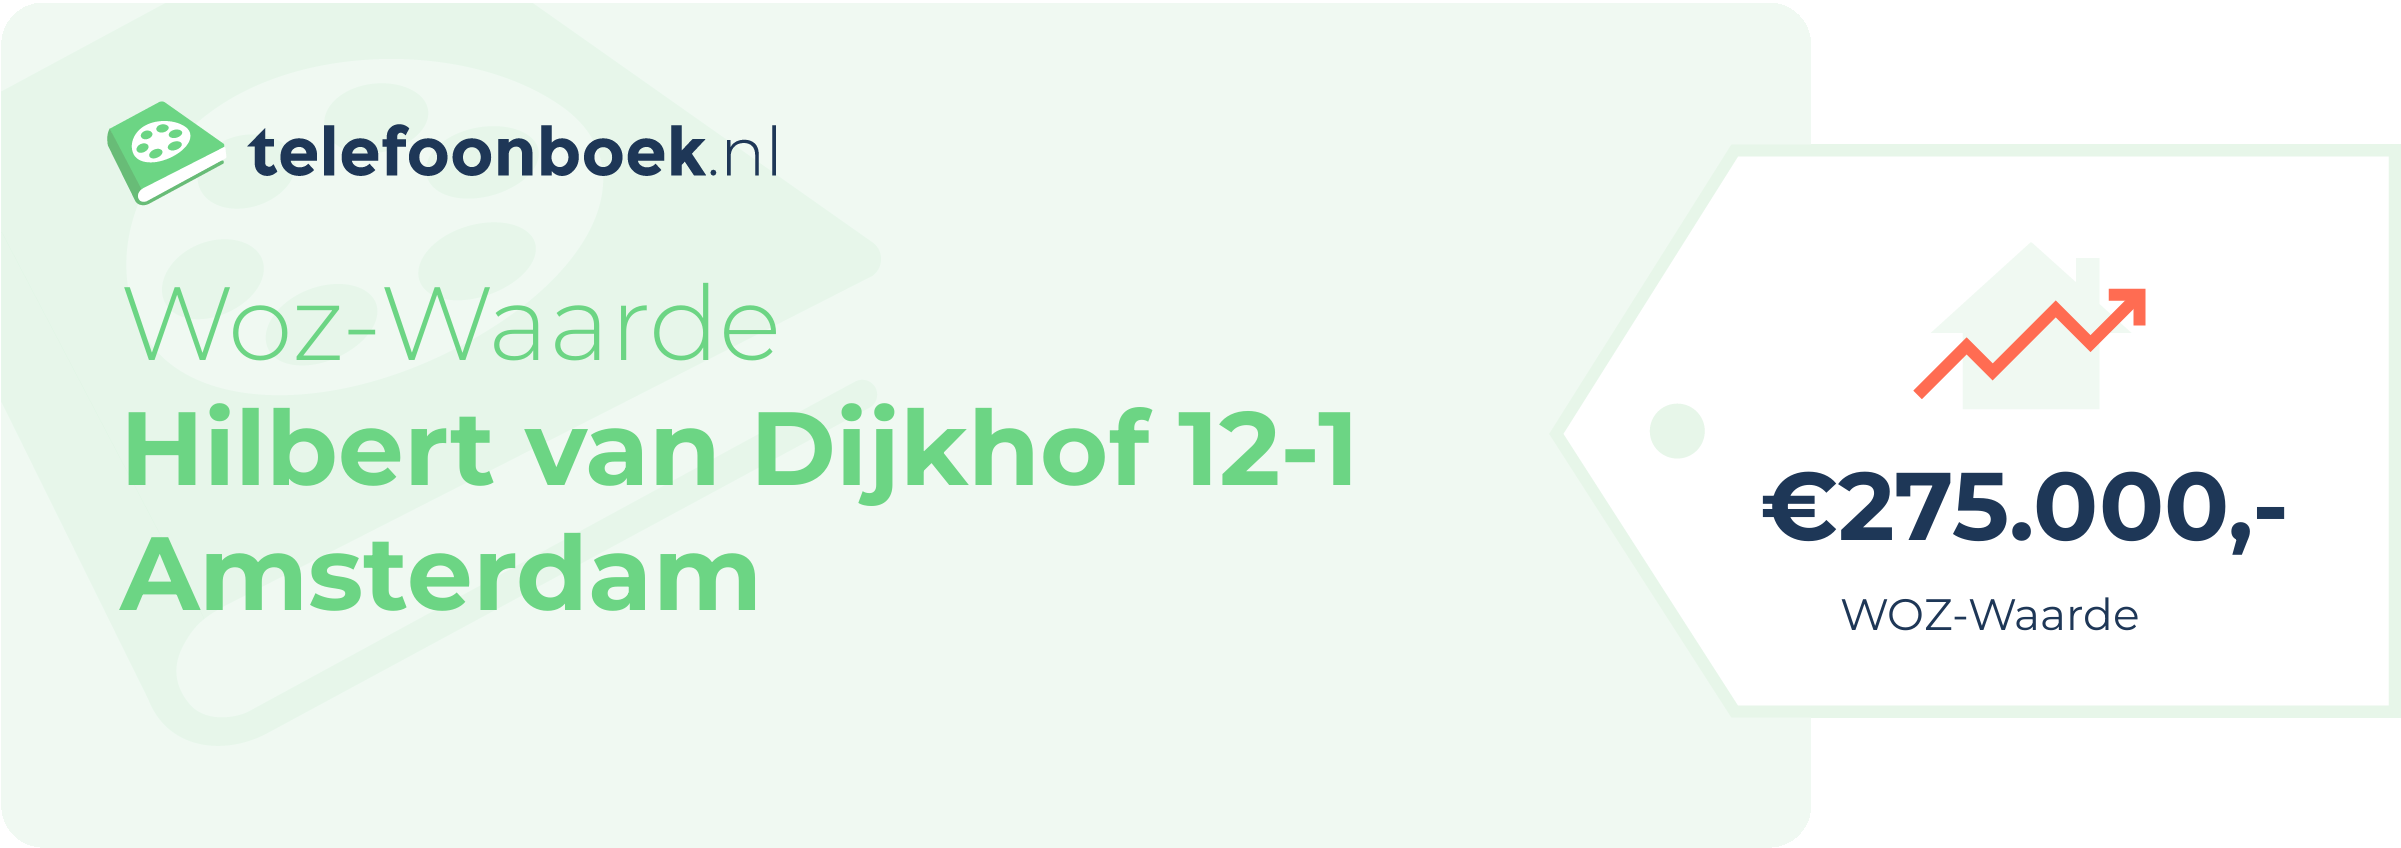 WOZ-waarde Hilbert Van Dijkhof 12-1 Amsterdam